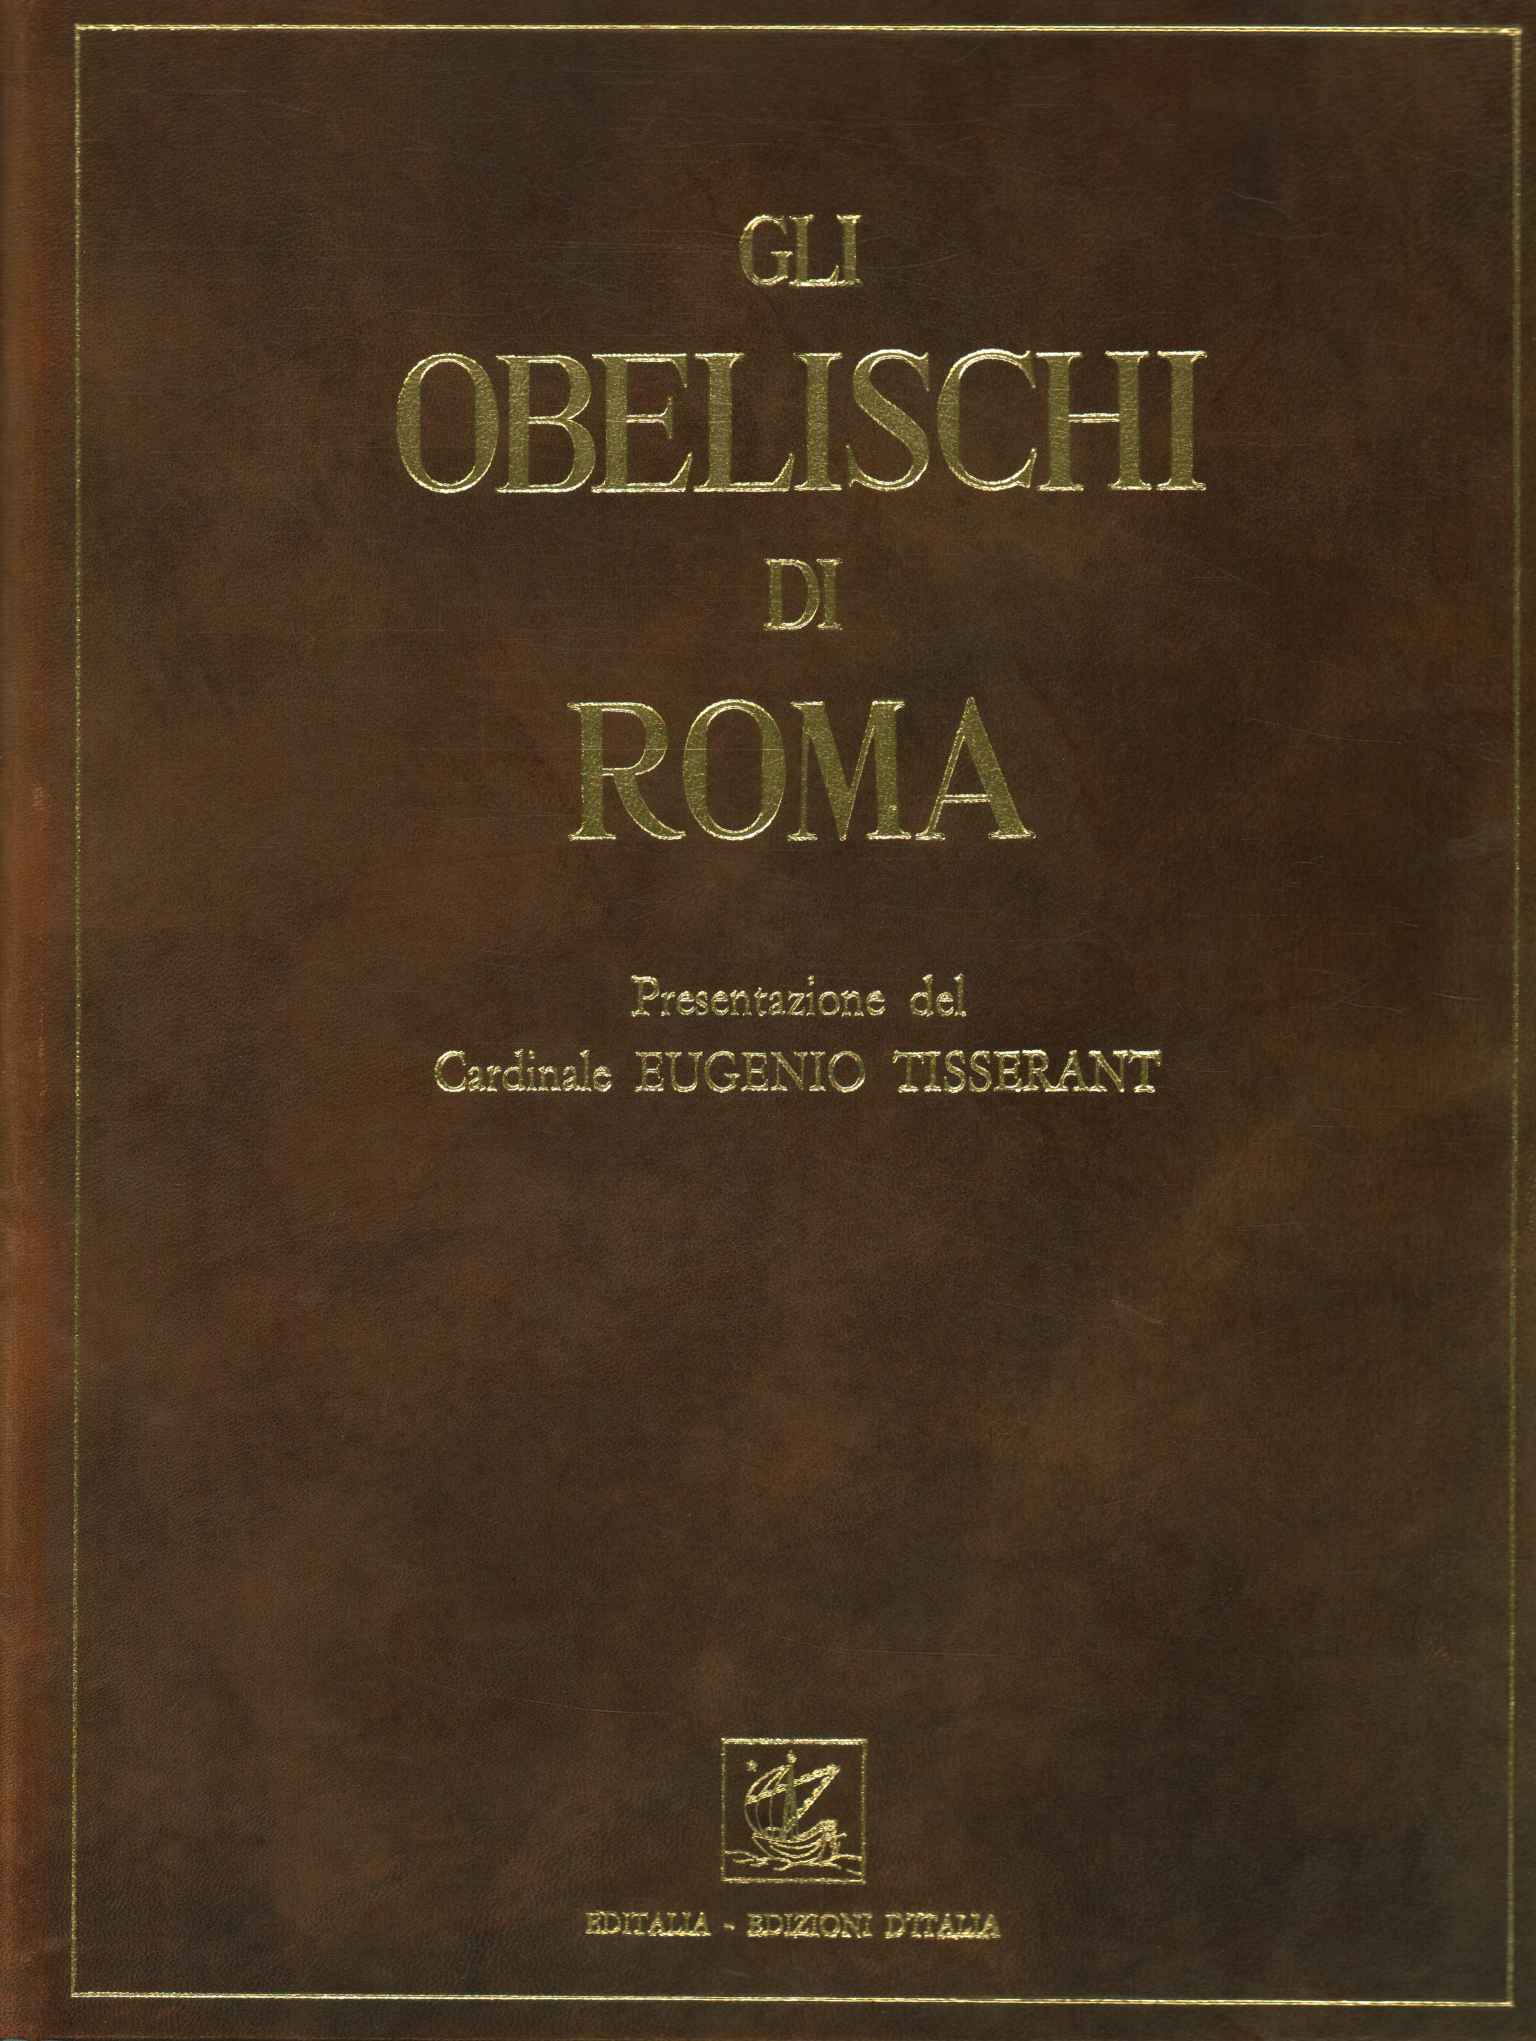 The obelisks of Rome,The obelisks of Rome and their epig